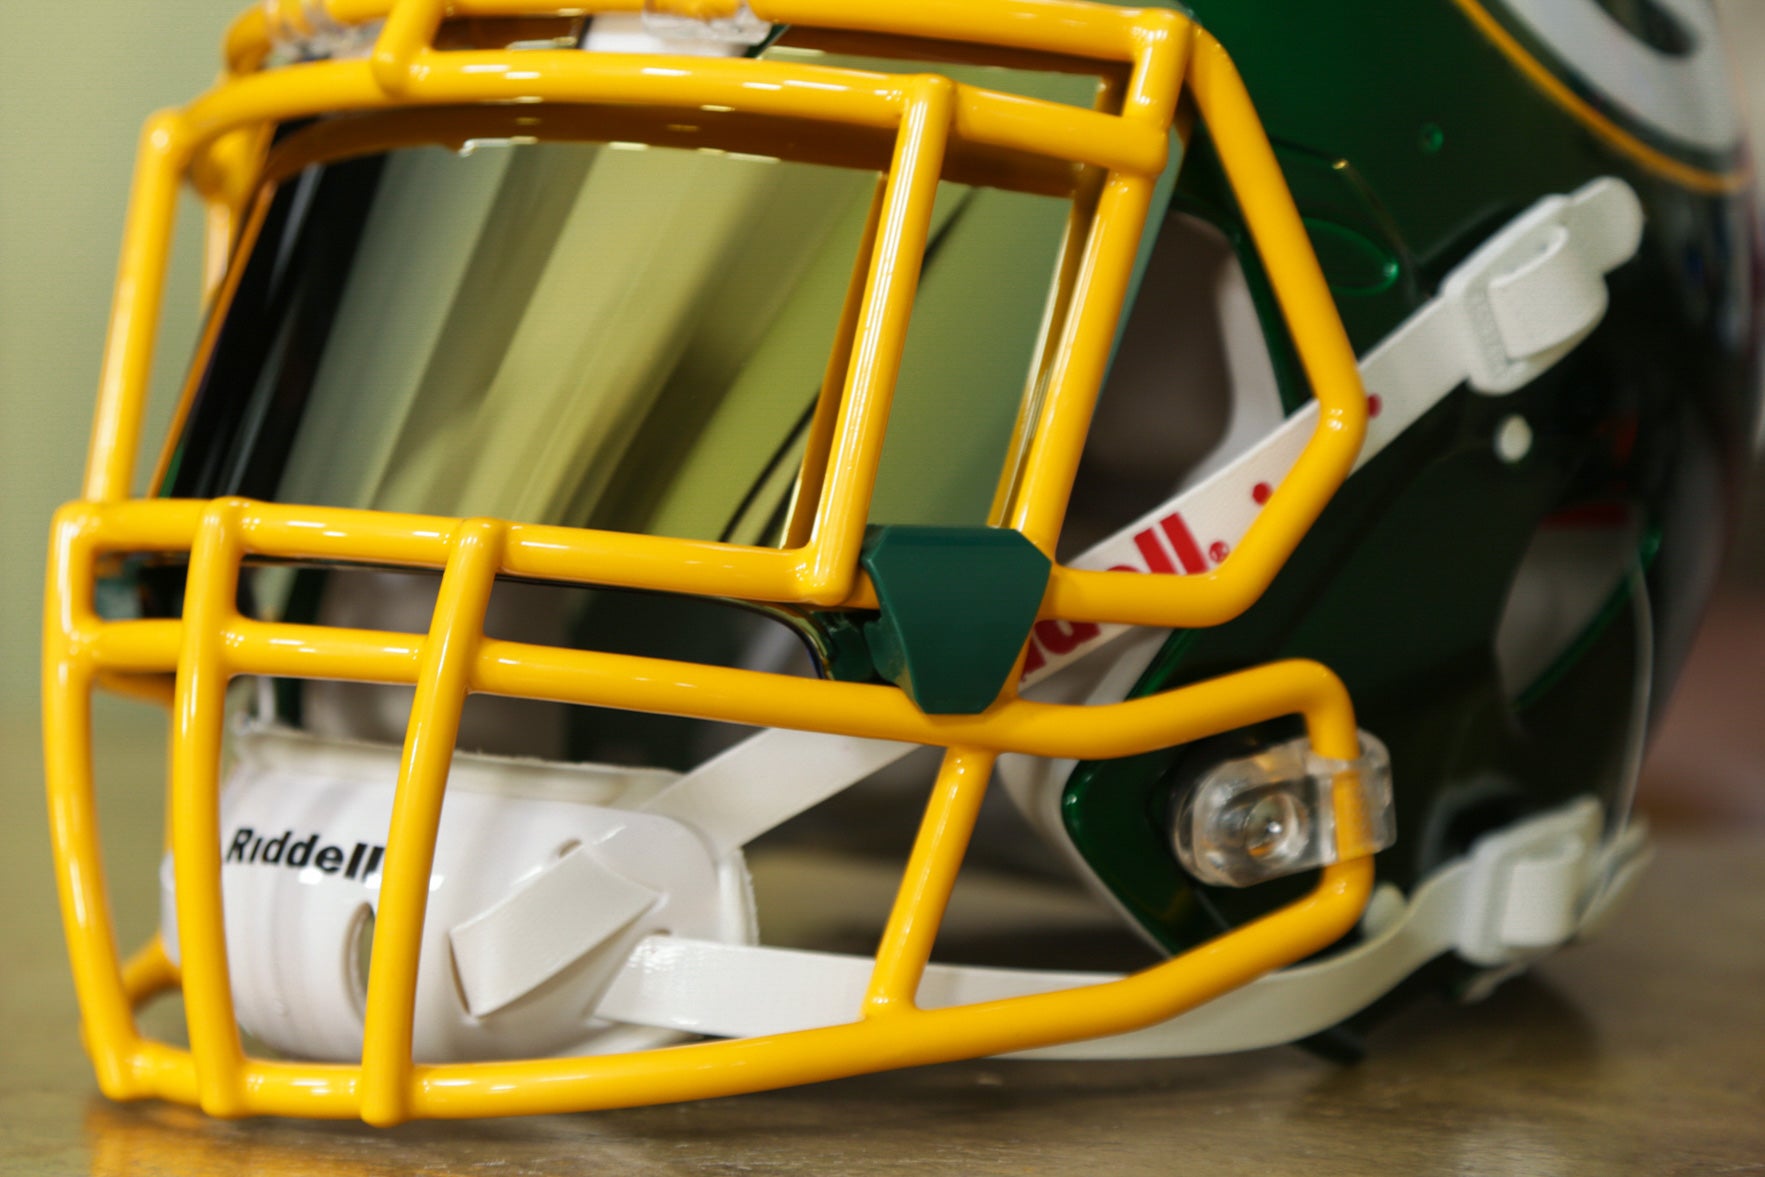 Green Bay Packers Riddell Speed Replica Helmet - Flash – Green